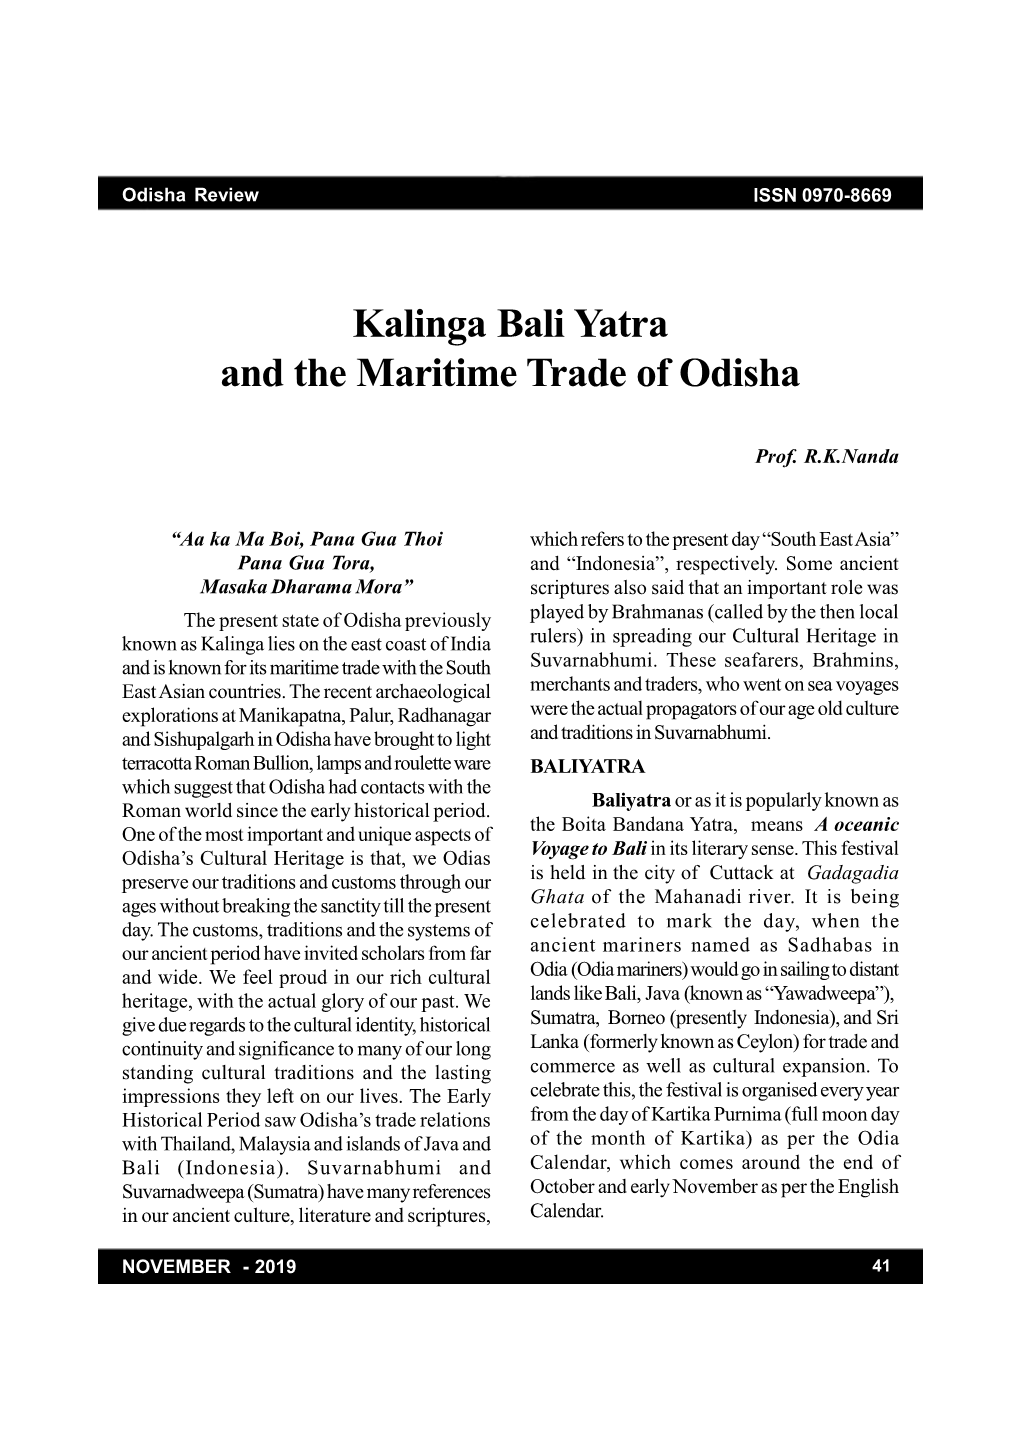 Kalinga Bali Yatra and the Maritime Trade of Odisha